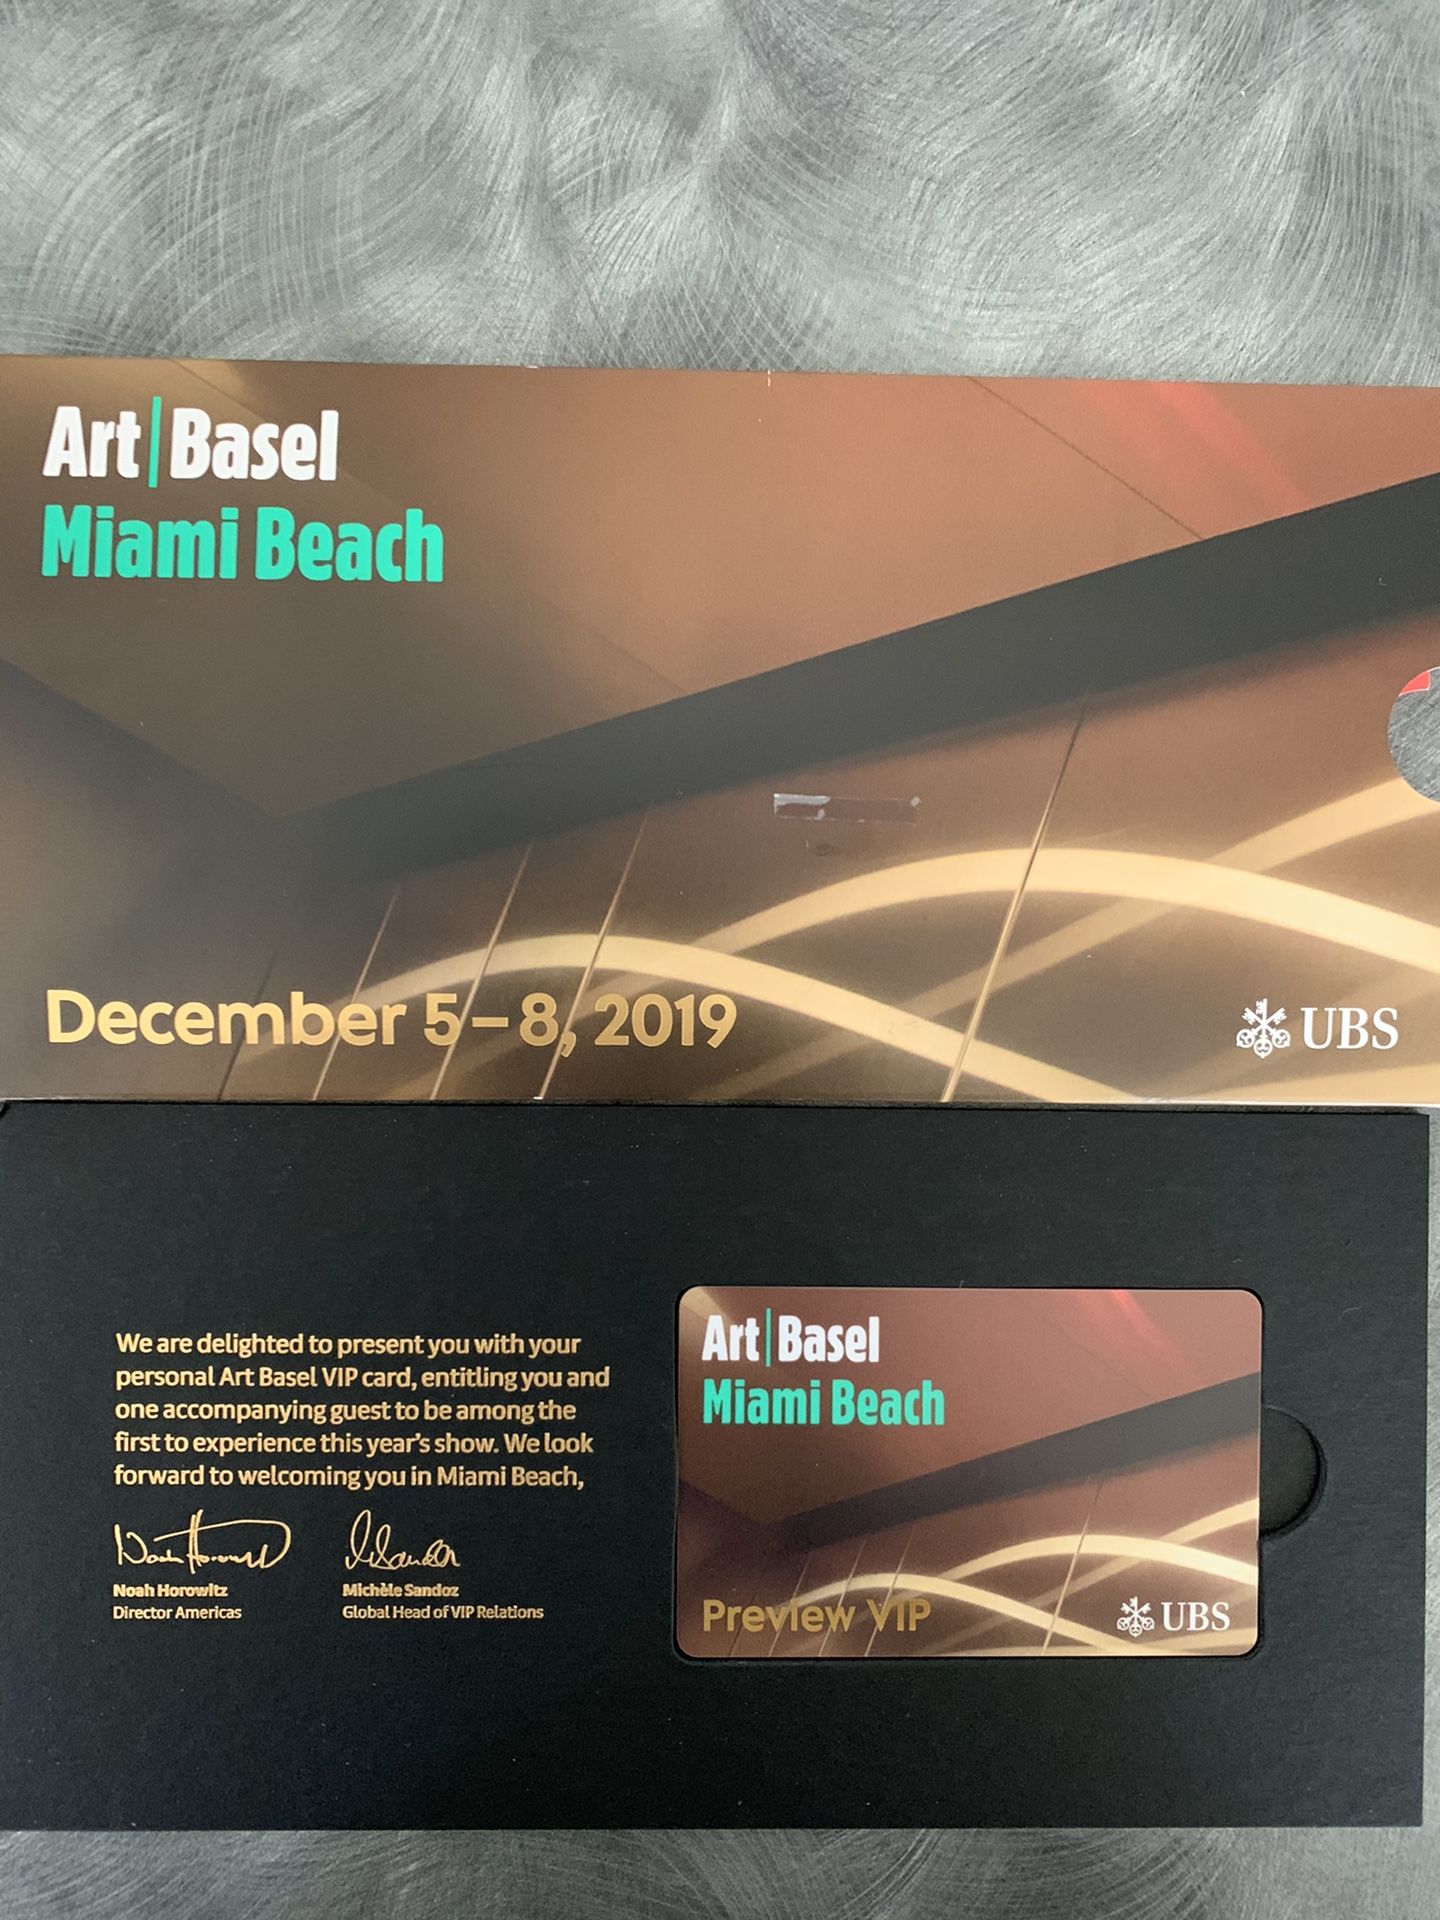 VIP TICKETS FOR ART BASEL IN MIAMI BEACH